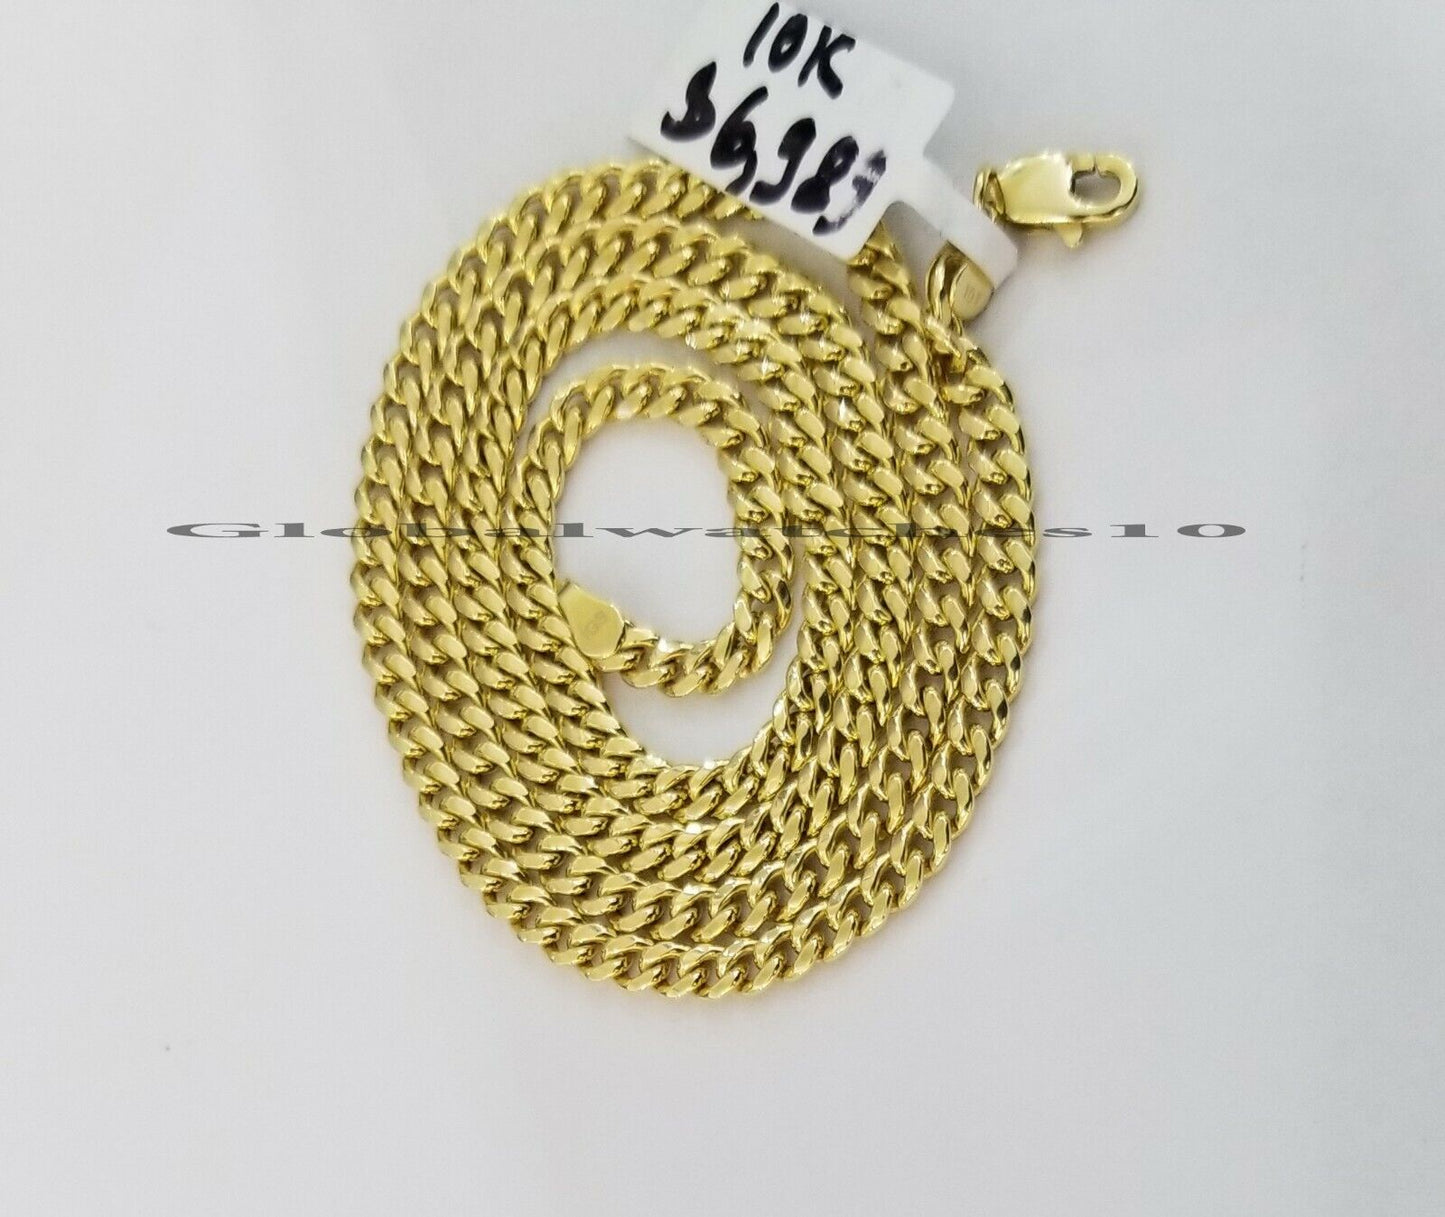 10k Gold Miami Cuban Chain Necklace & Bracelet 2MM-9MM link 7-30" Real 10kt Gold